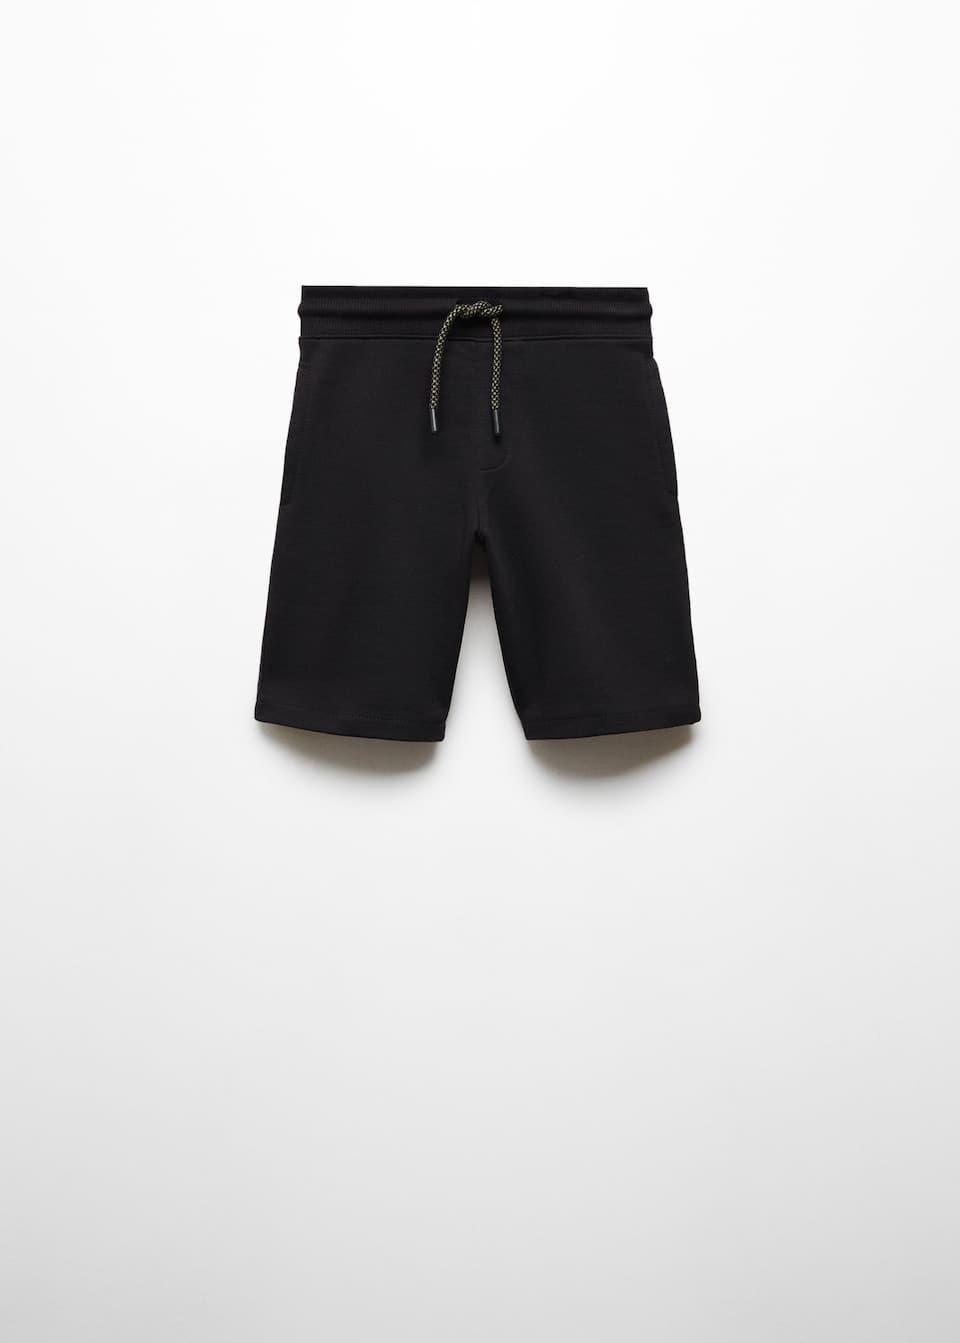 Mango - Black Elastic Waist Cotton Shorts, Kids Boys